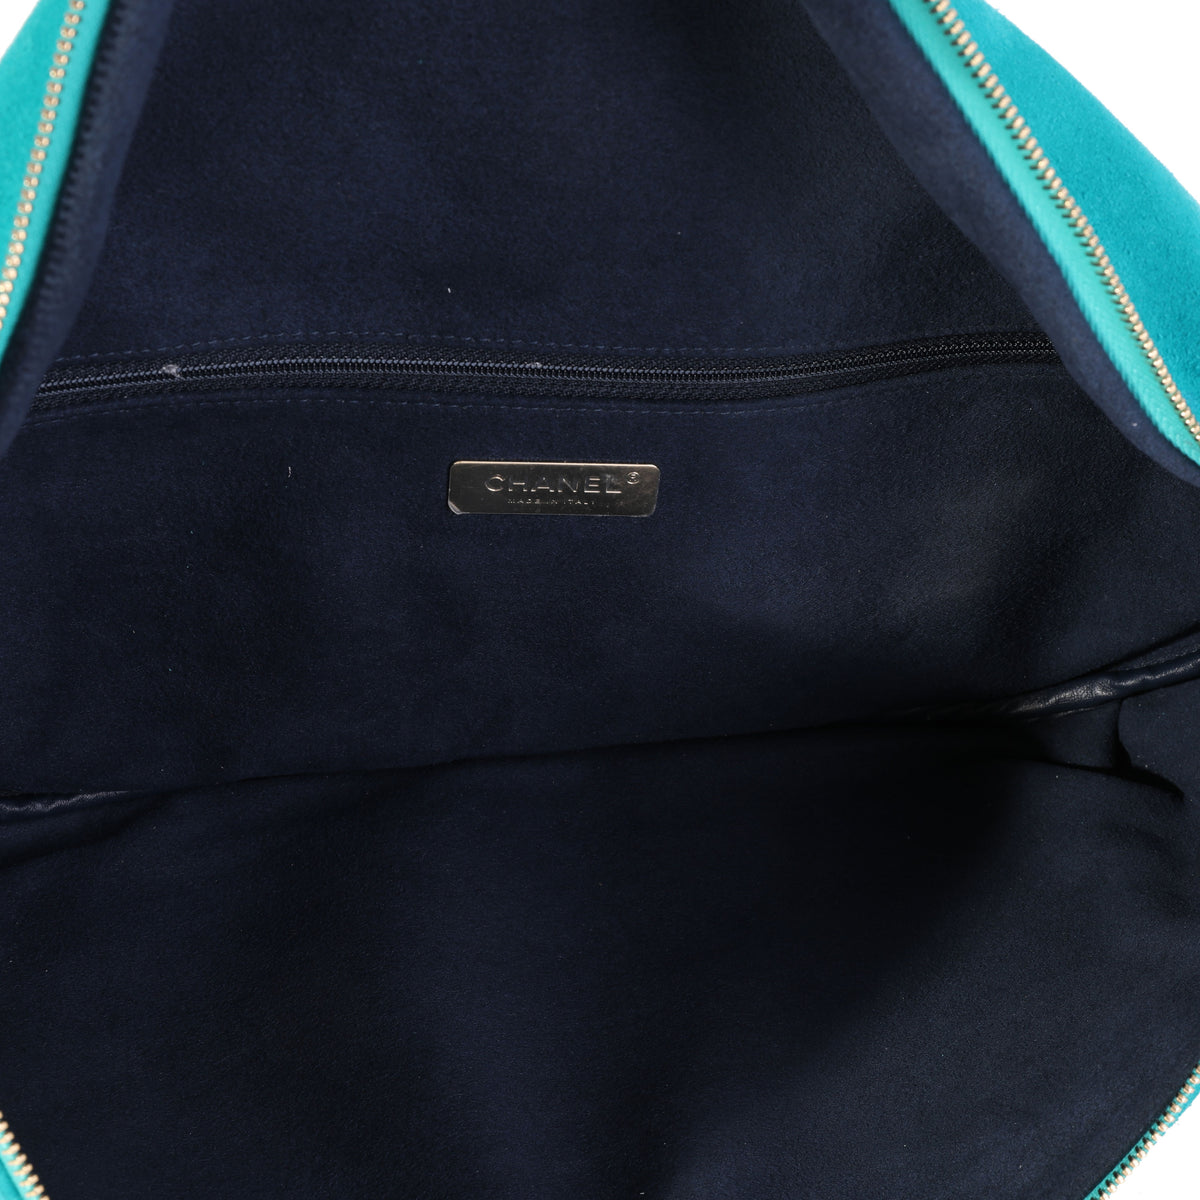 Handbag Chanel x Pharrell Williams Black in Suede  18734219